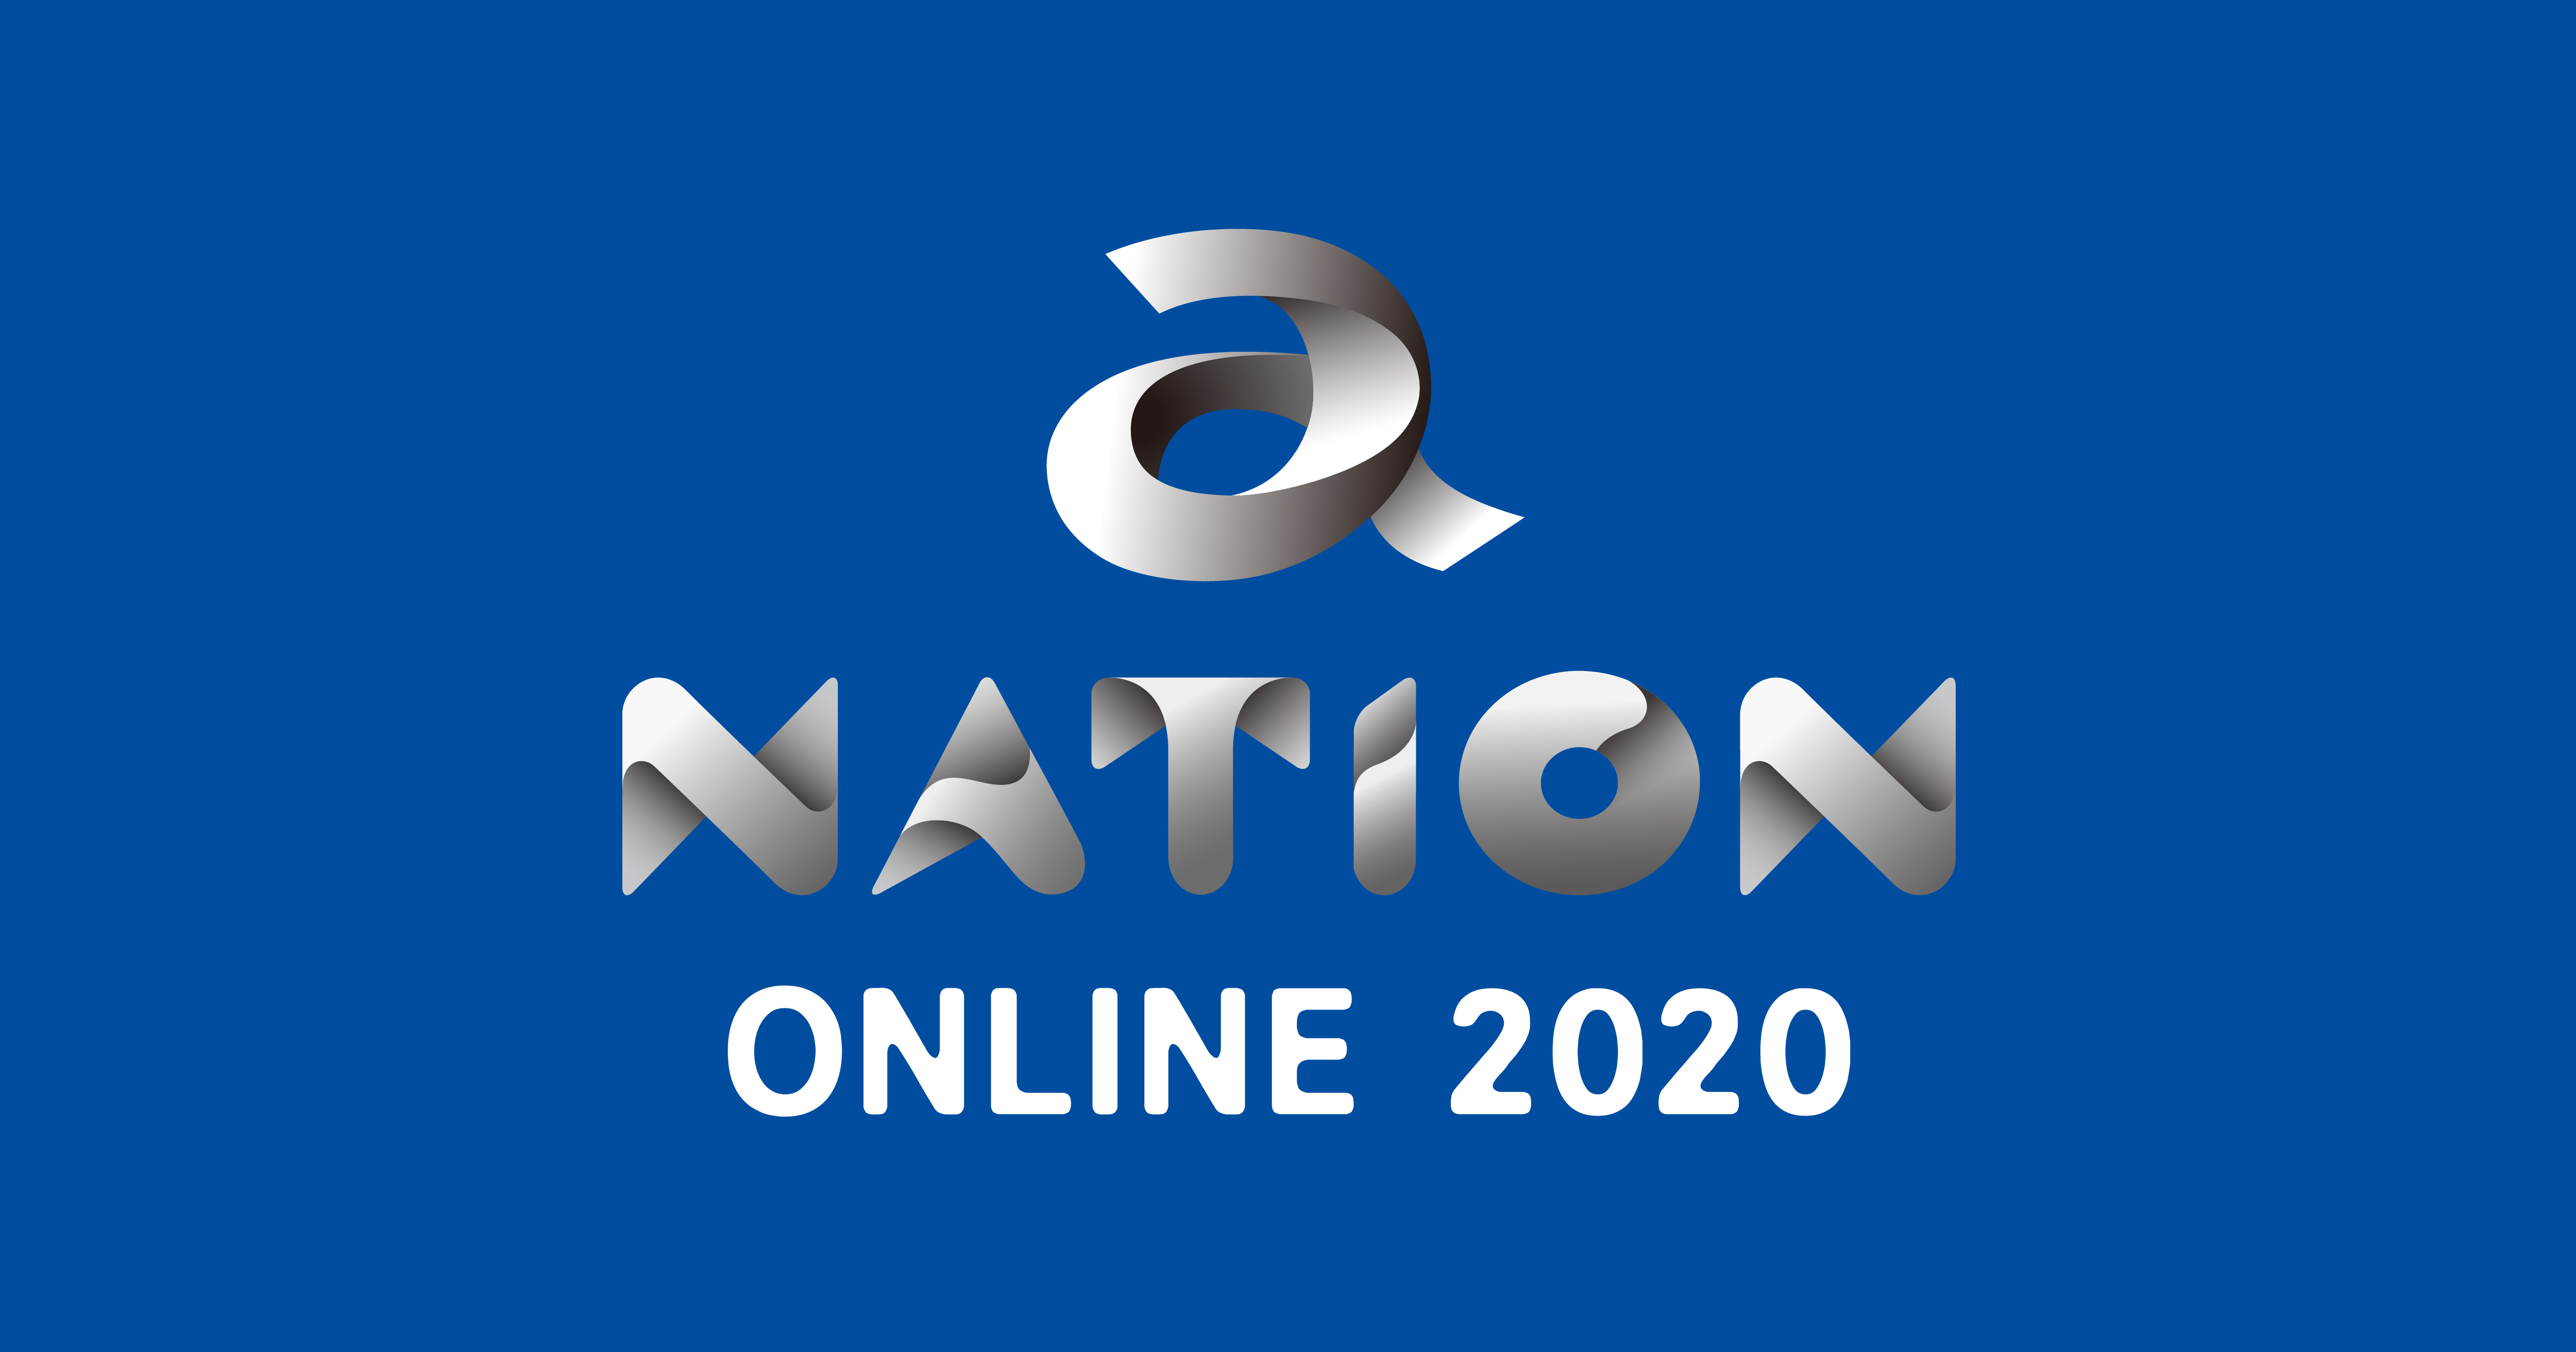 【MUSIC ON! TV（エムオン!）】
「a-nation online 2020」
エムオン!とBSスカパー! で
9月・10月・11月連続放送決定！